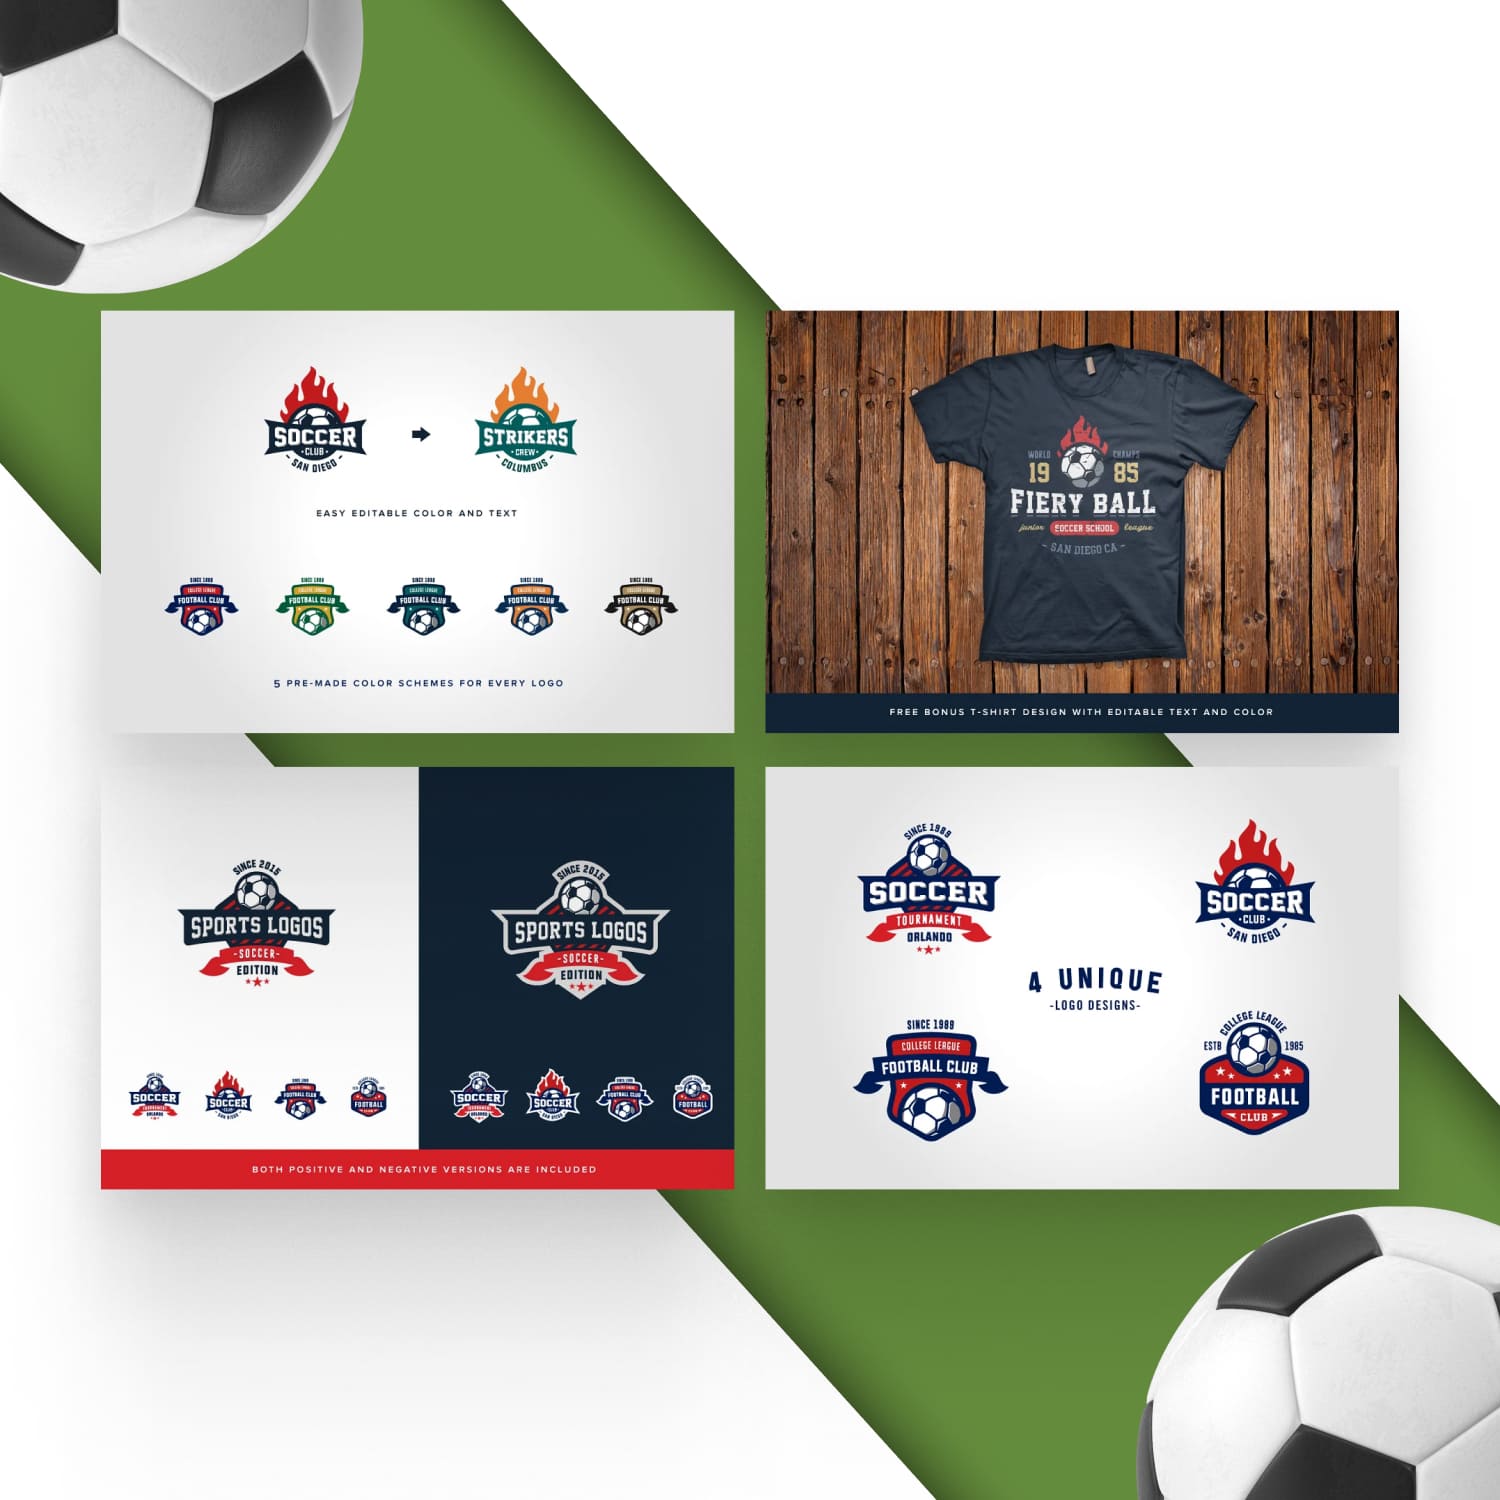 Sports Logos Soccer Football Edition cover.